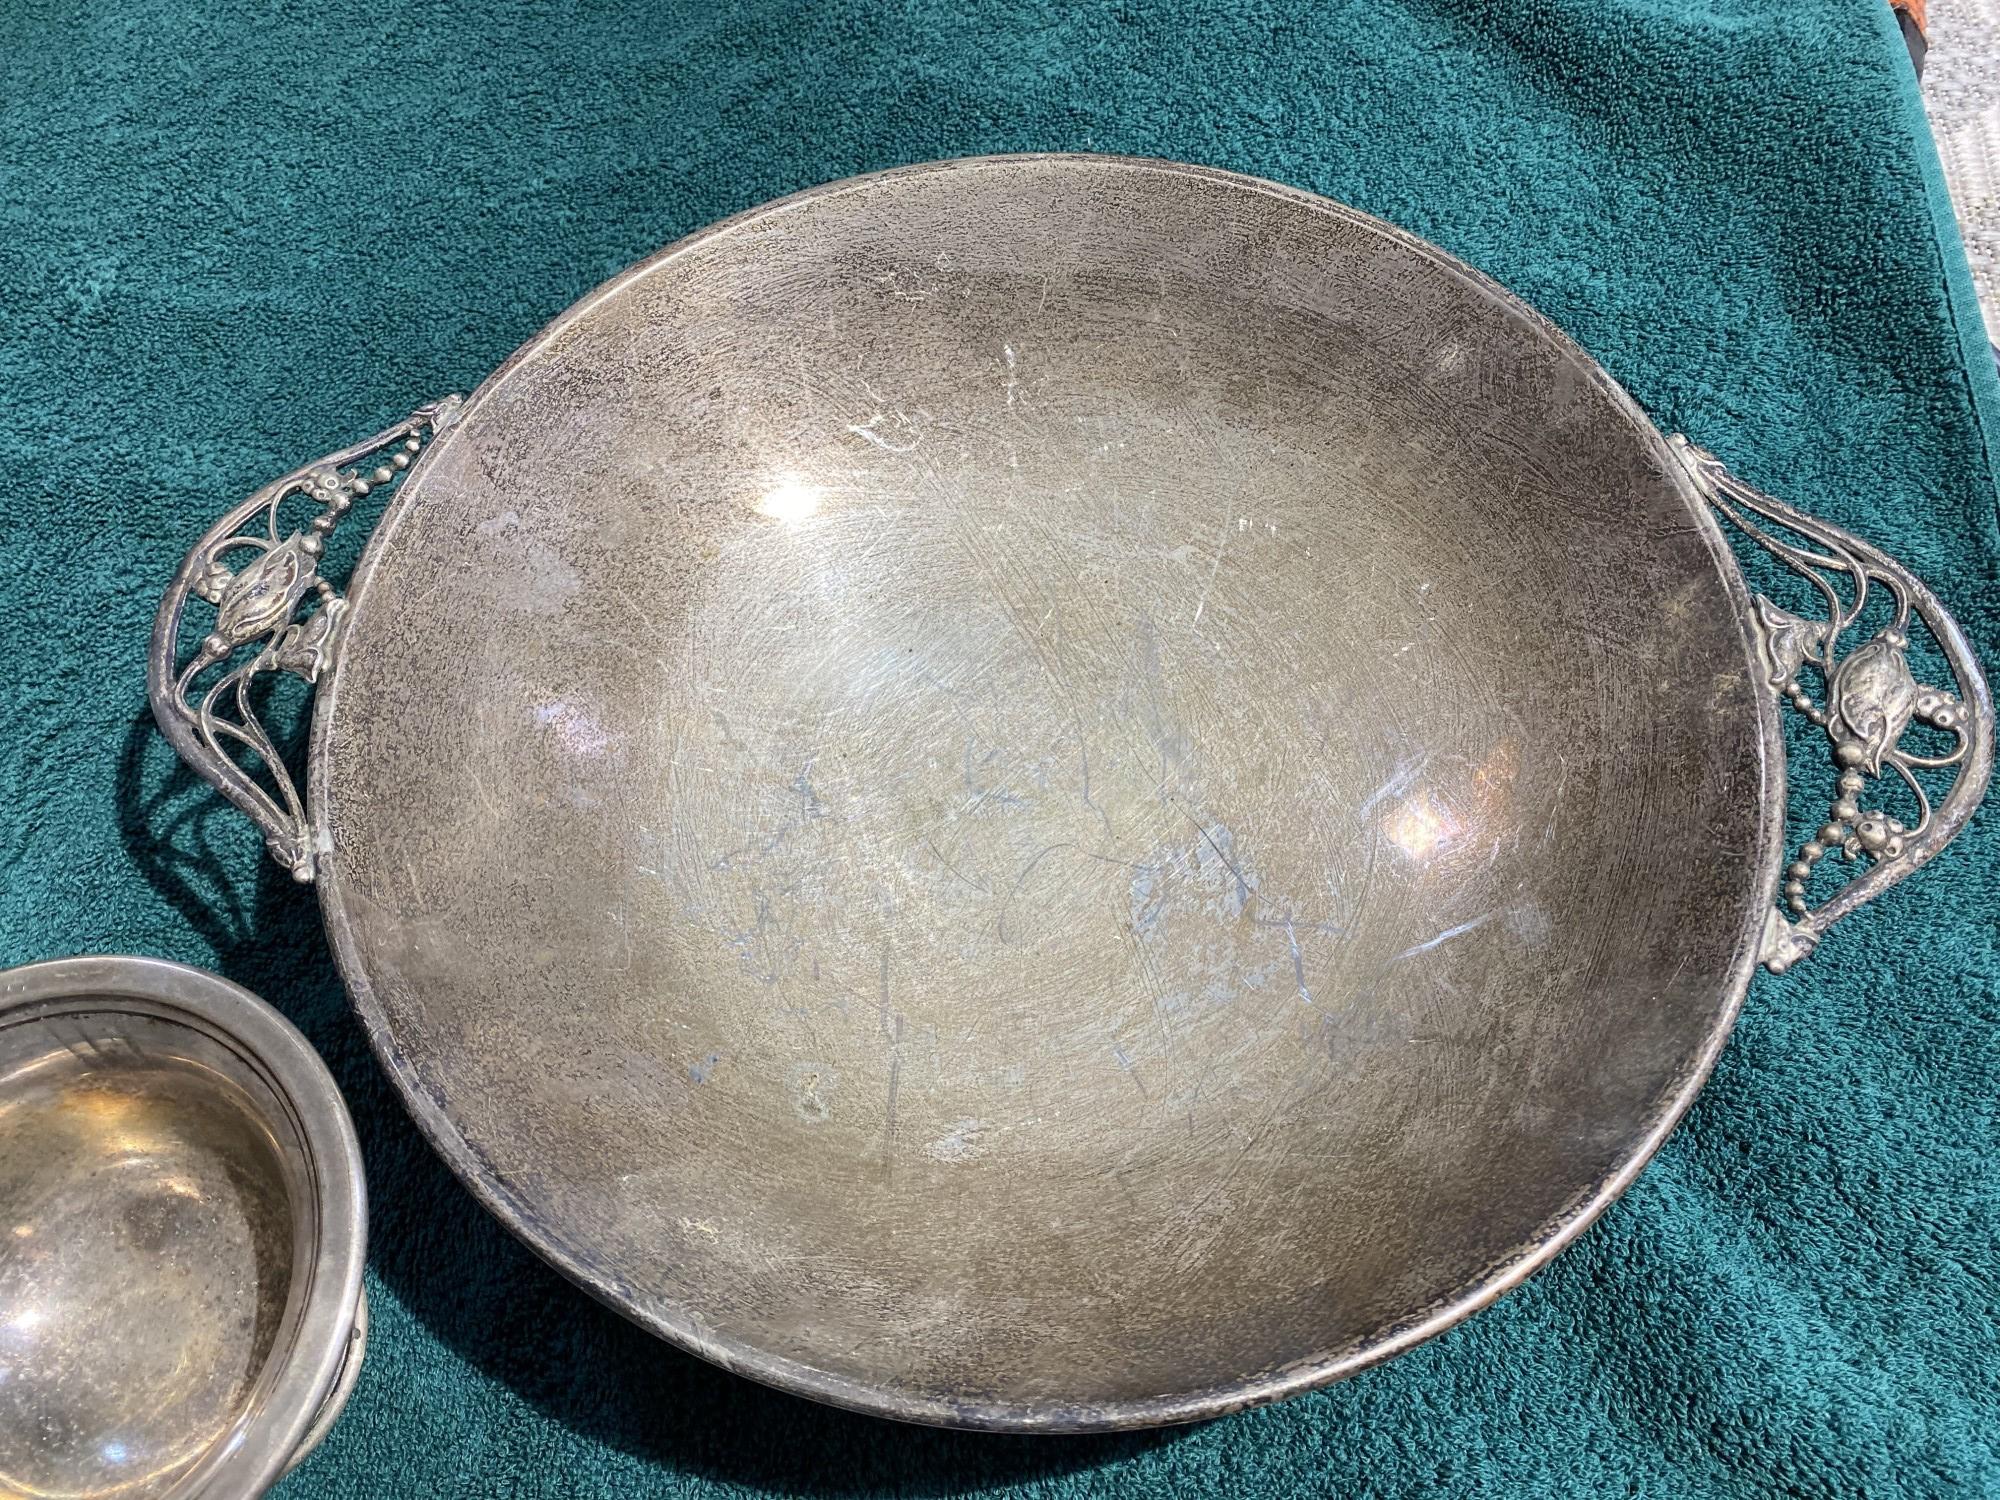 905 grams sterling silver -Large Bowl PLUS